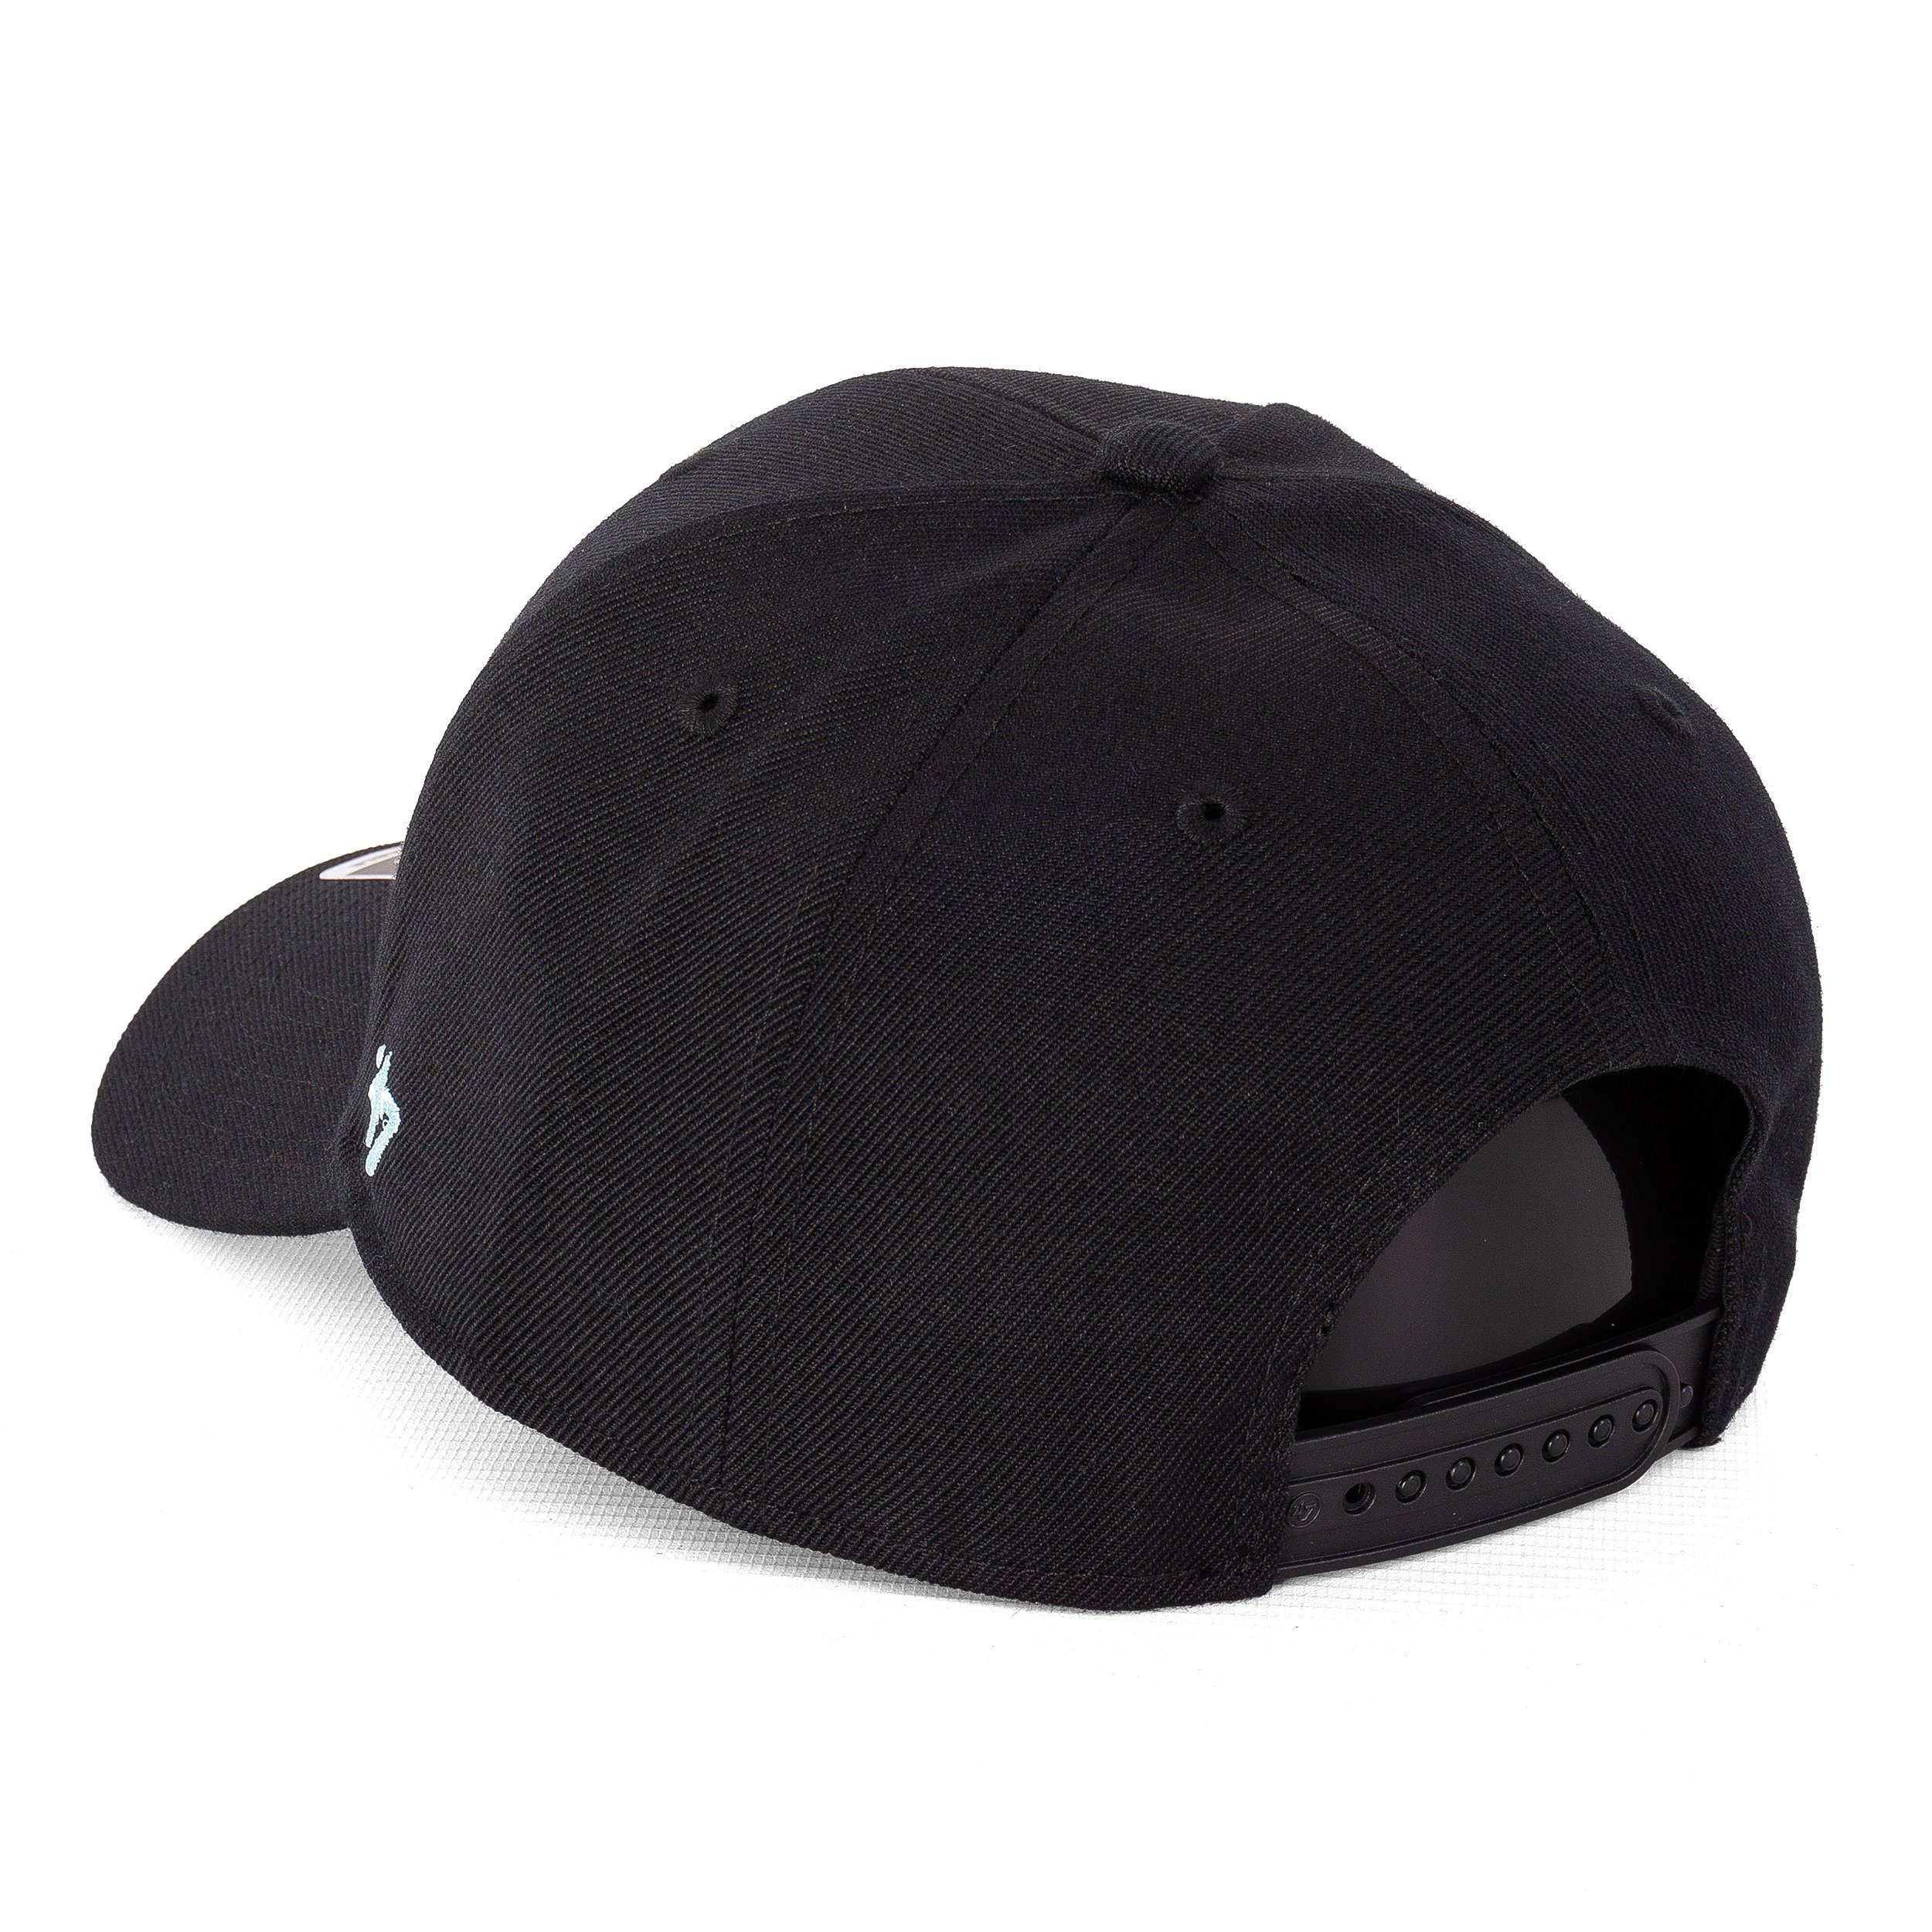 Cap schwarz Snapback Anaheim Ducks Brand ´47 Brand Baseball Cap '47